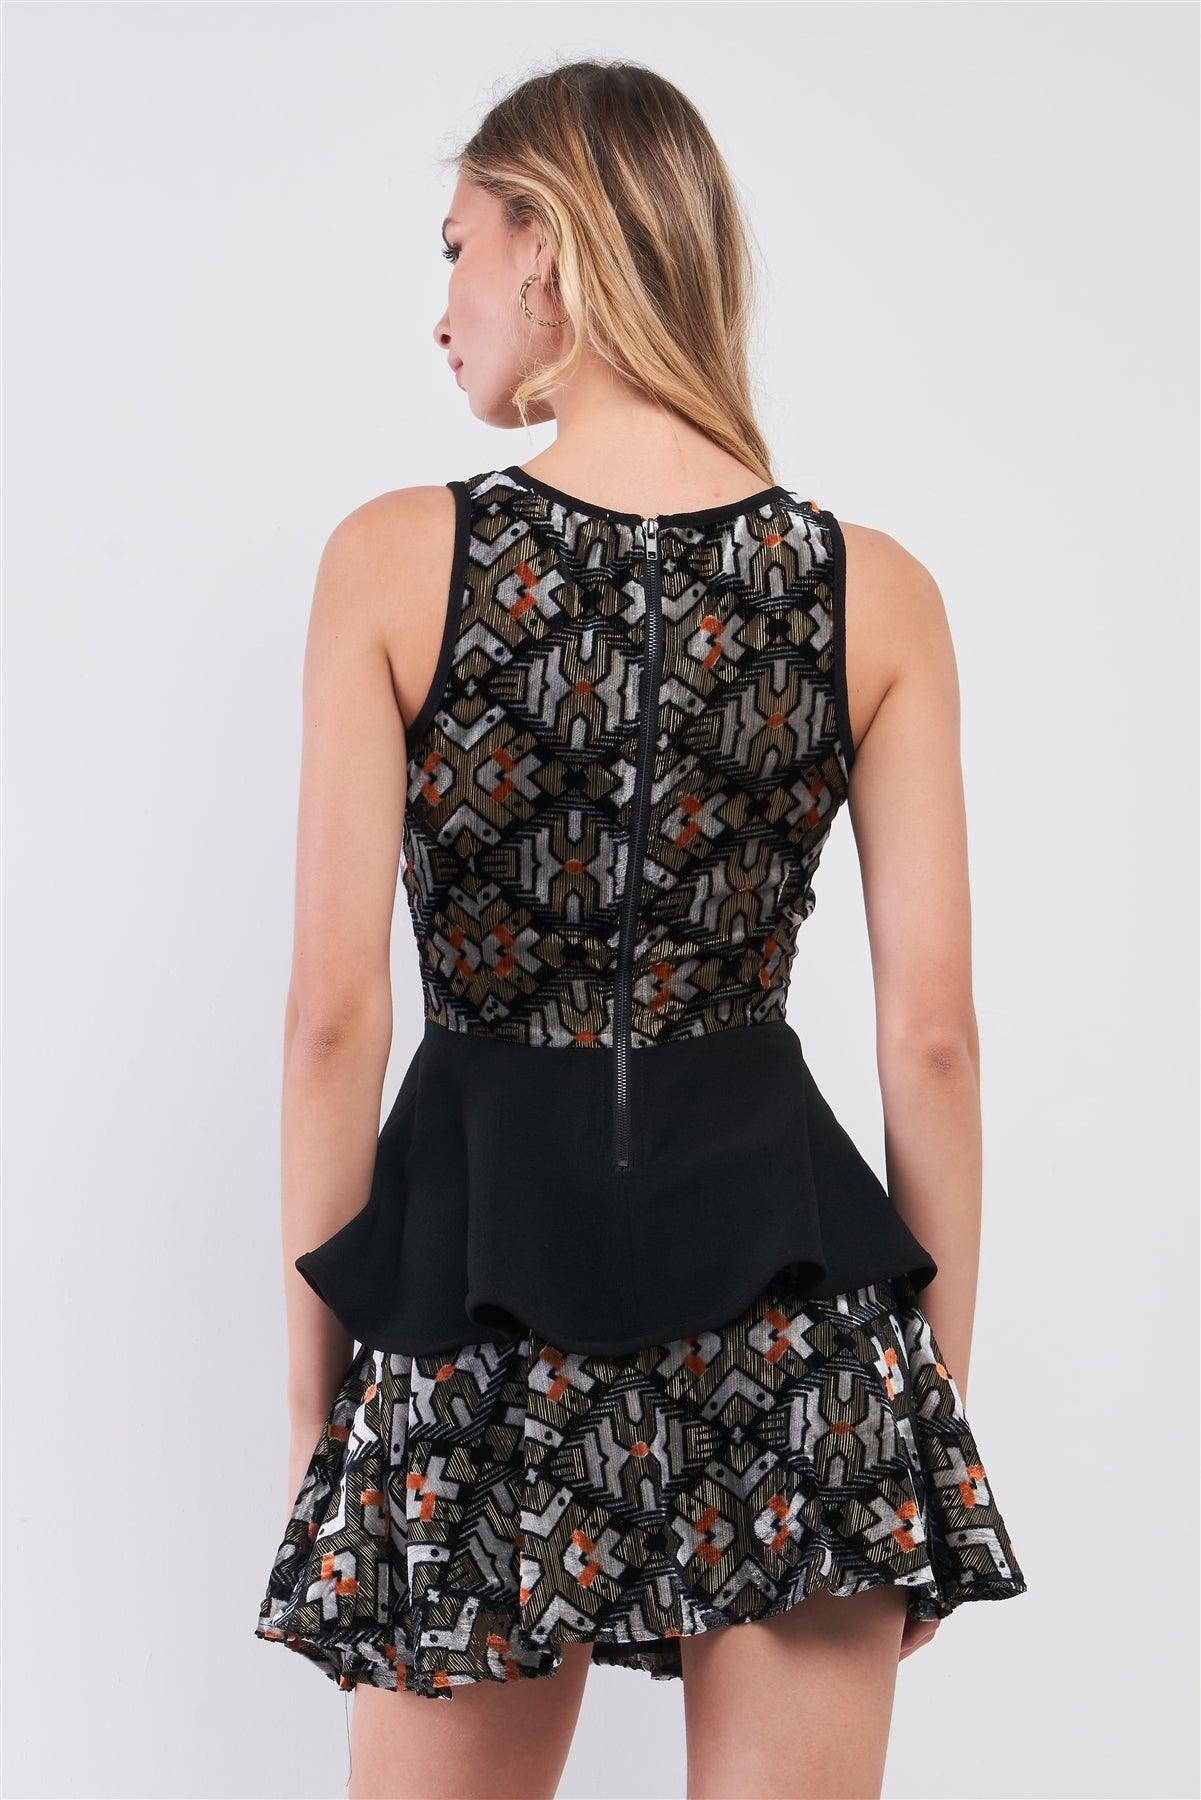 Black Multi Geometric Print Velvet Sleeveless Round Neck Peplum Top & High-Waisted Flare Mini Skirt Two Piece Set /1-1-2-1